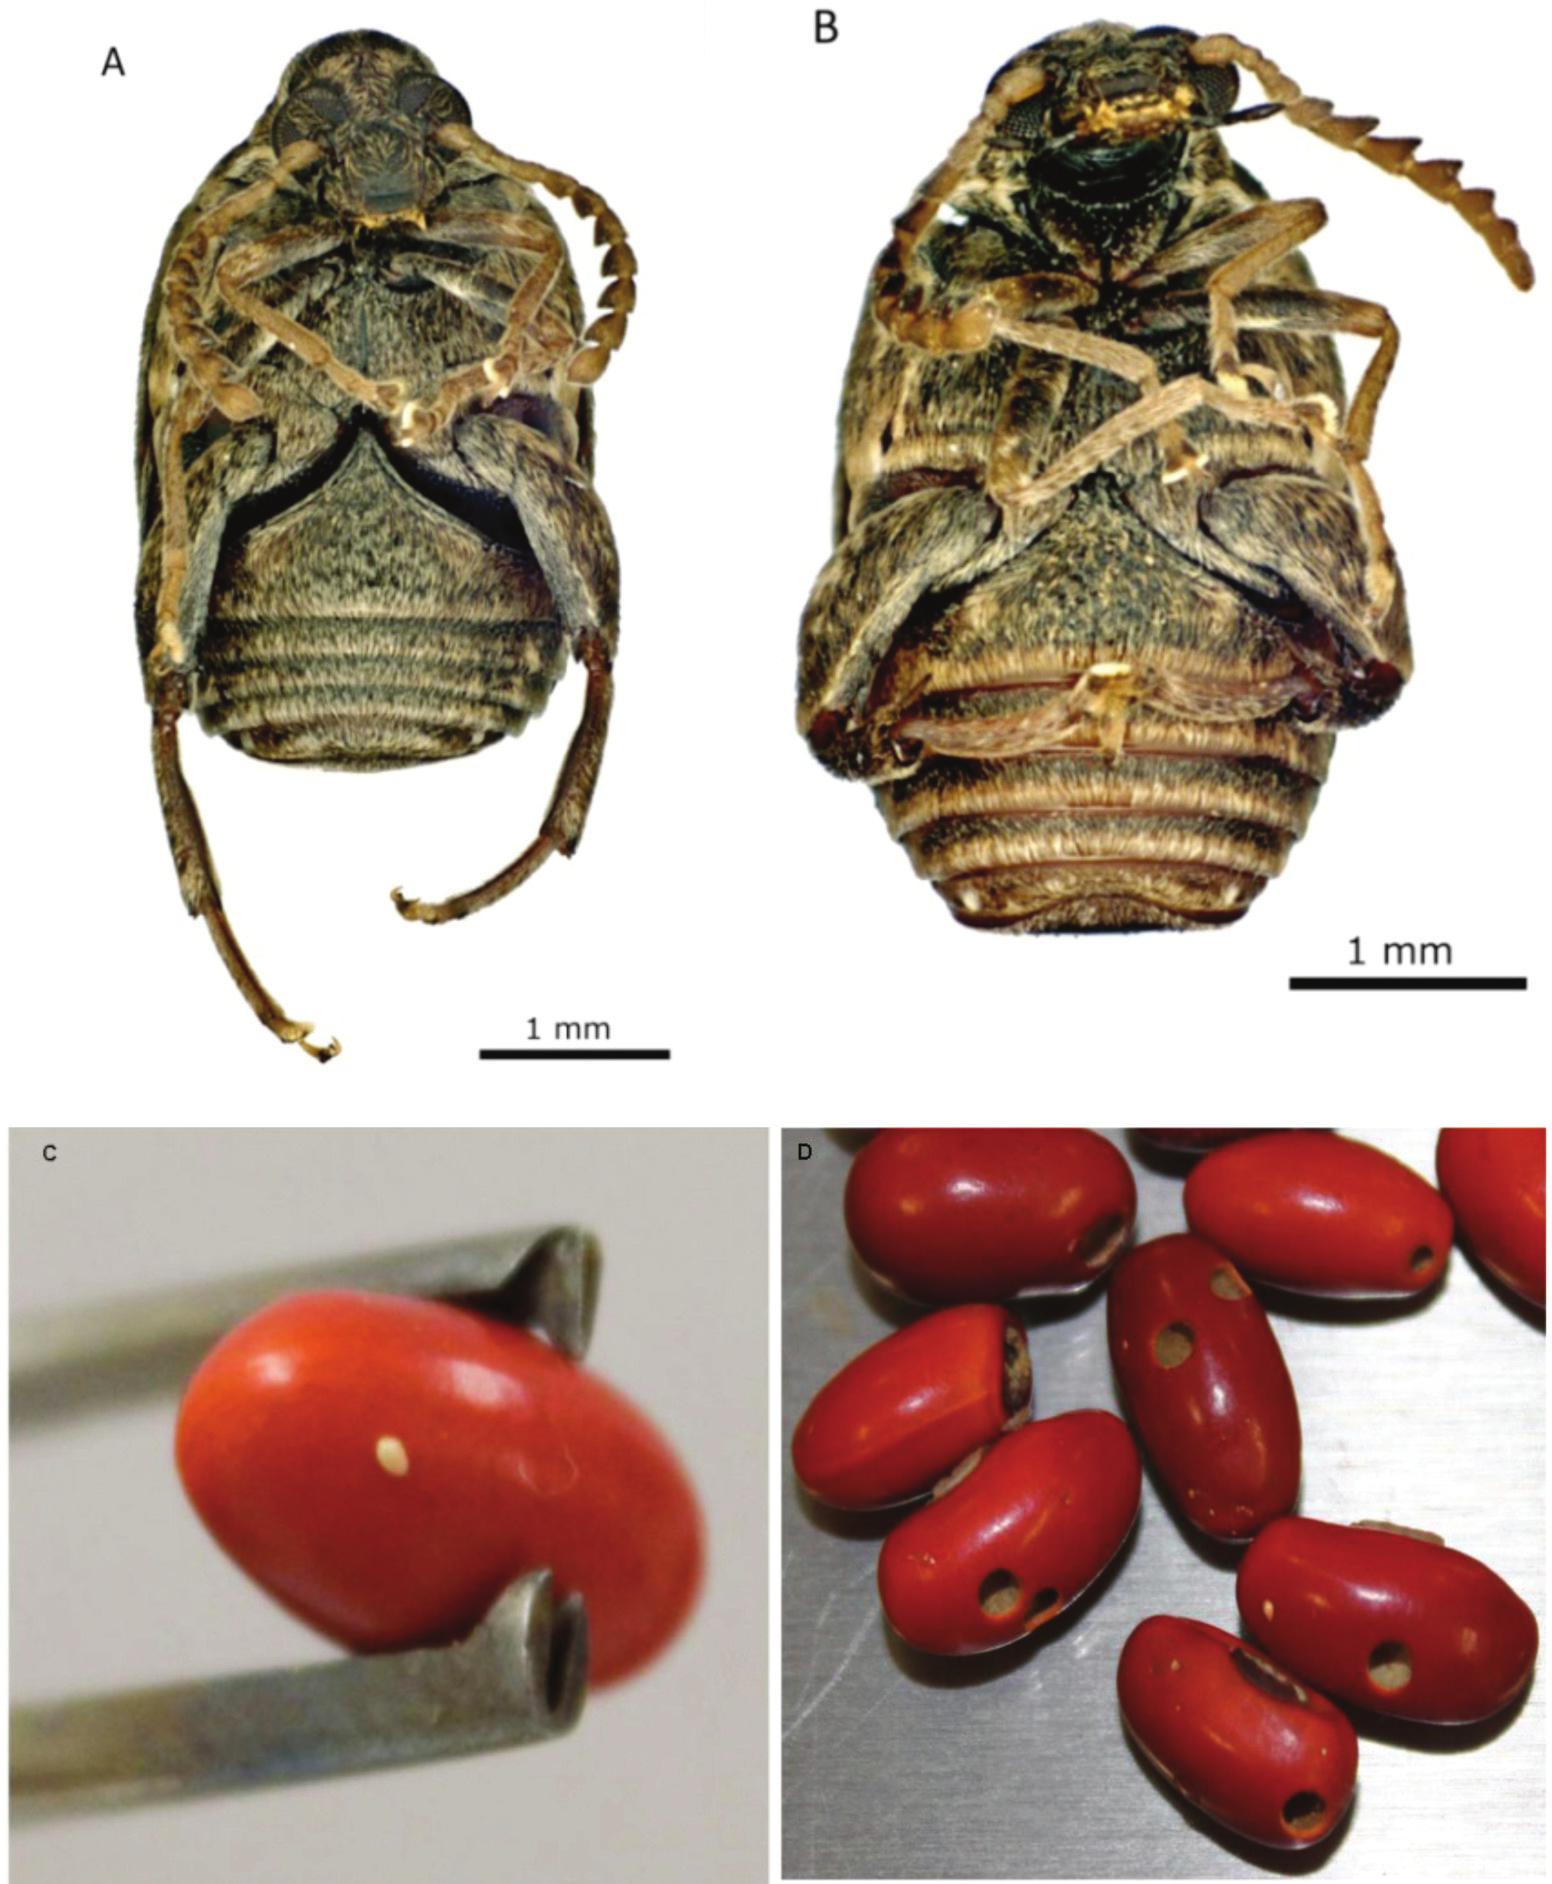 Ruiz Montiel et al.: Specularius impressithorax en semillas de Erythrina americana Figura 1.